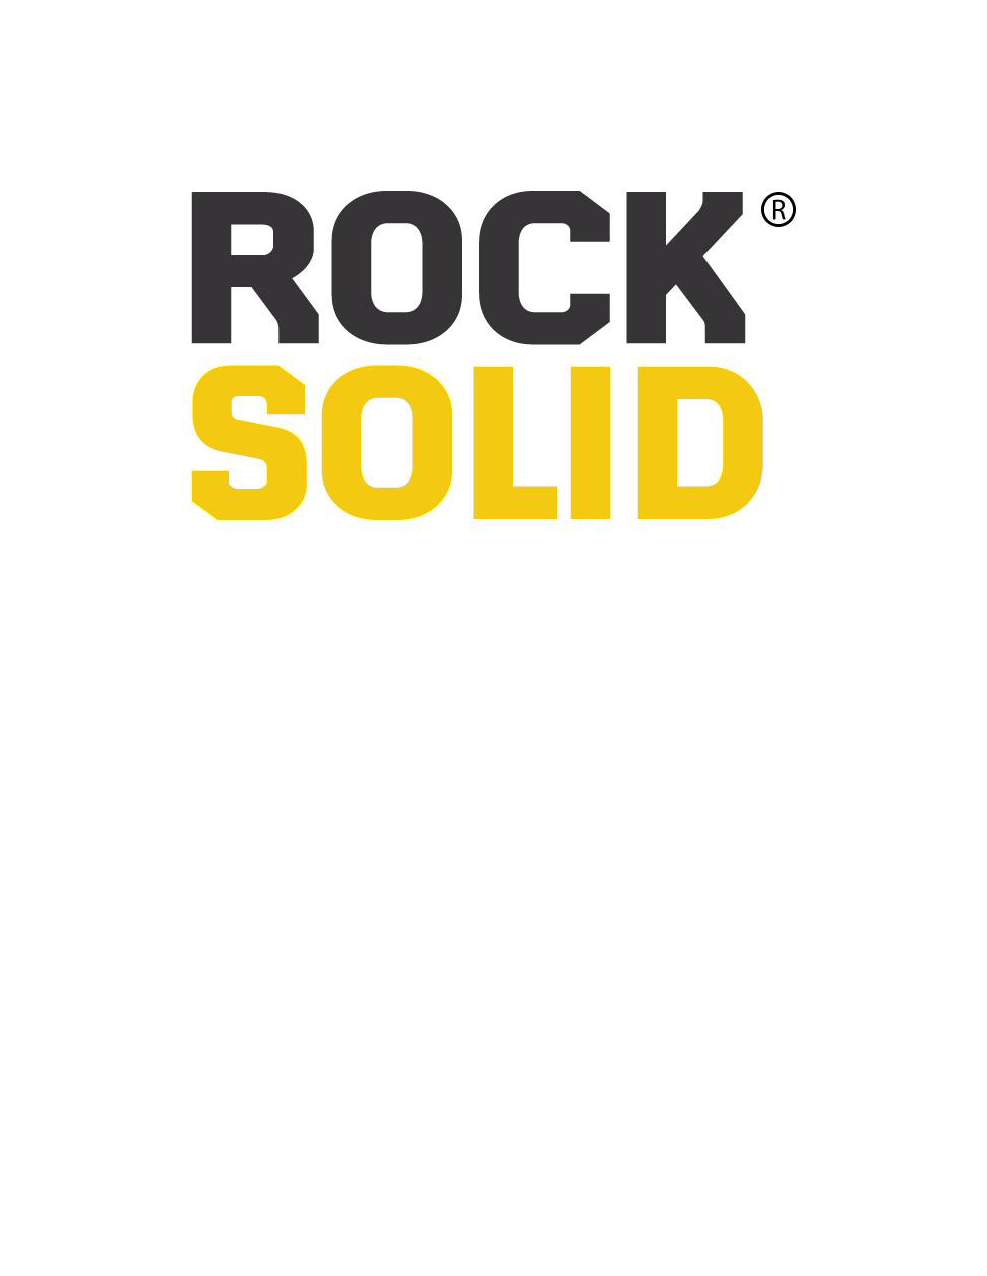 Rock Solid Stabilization Reclamation, Inc.